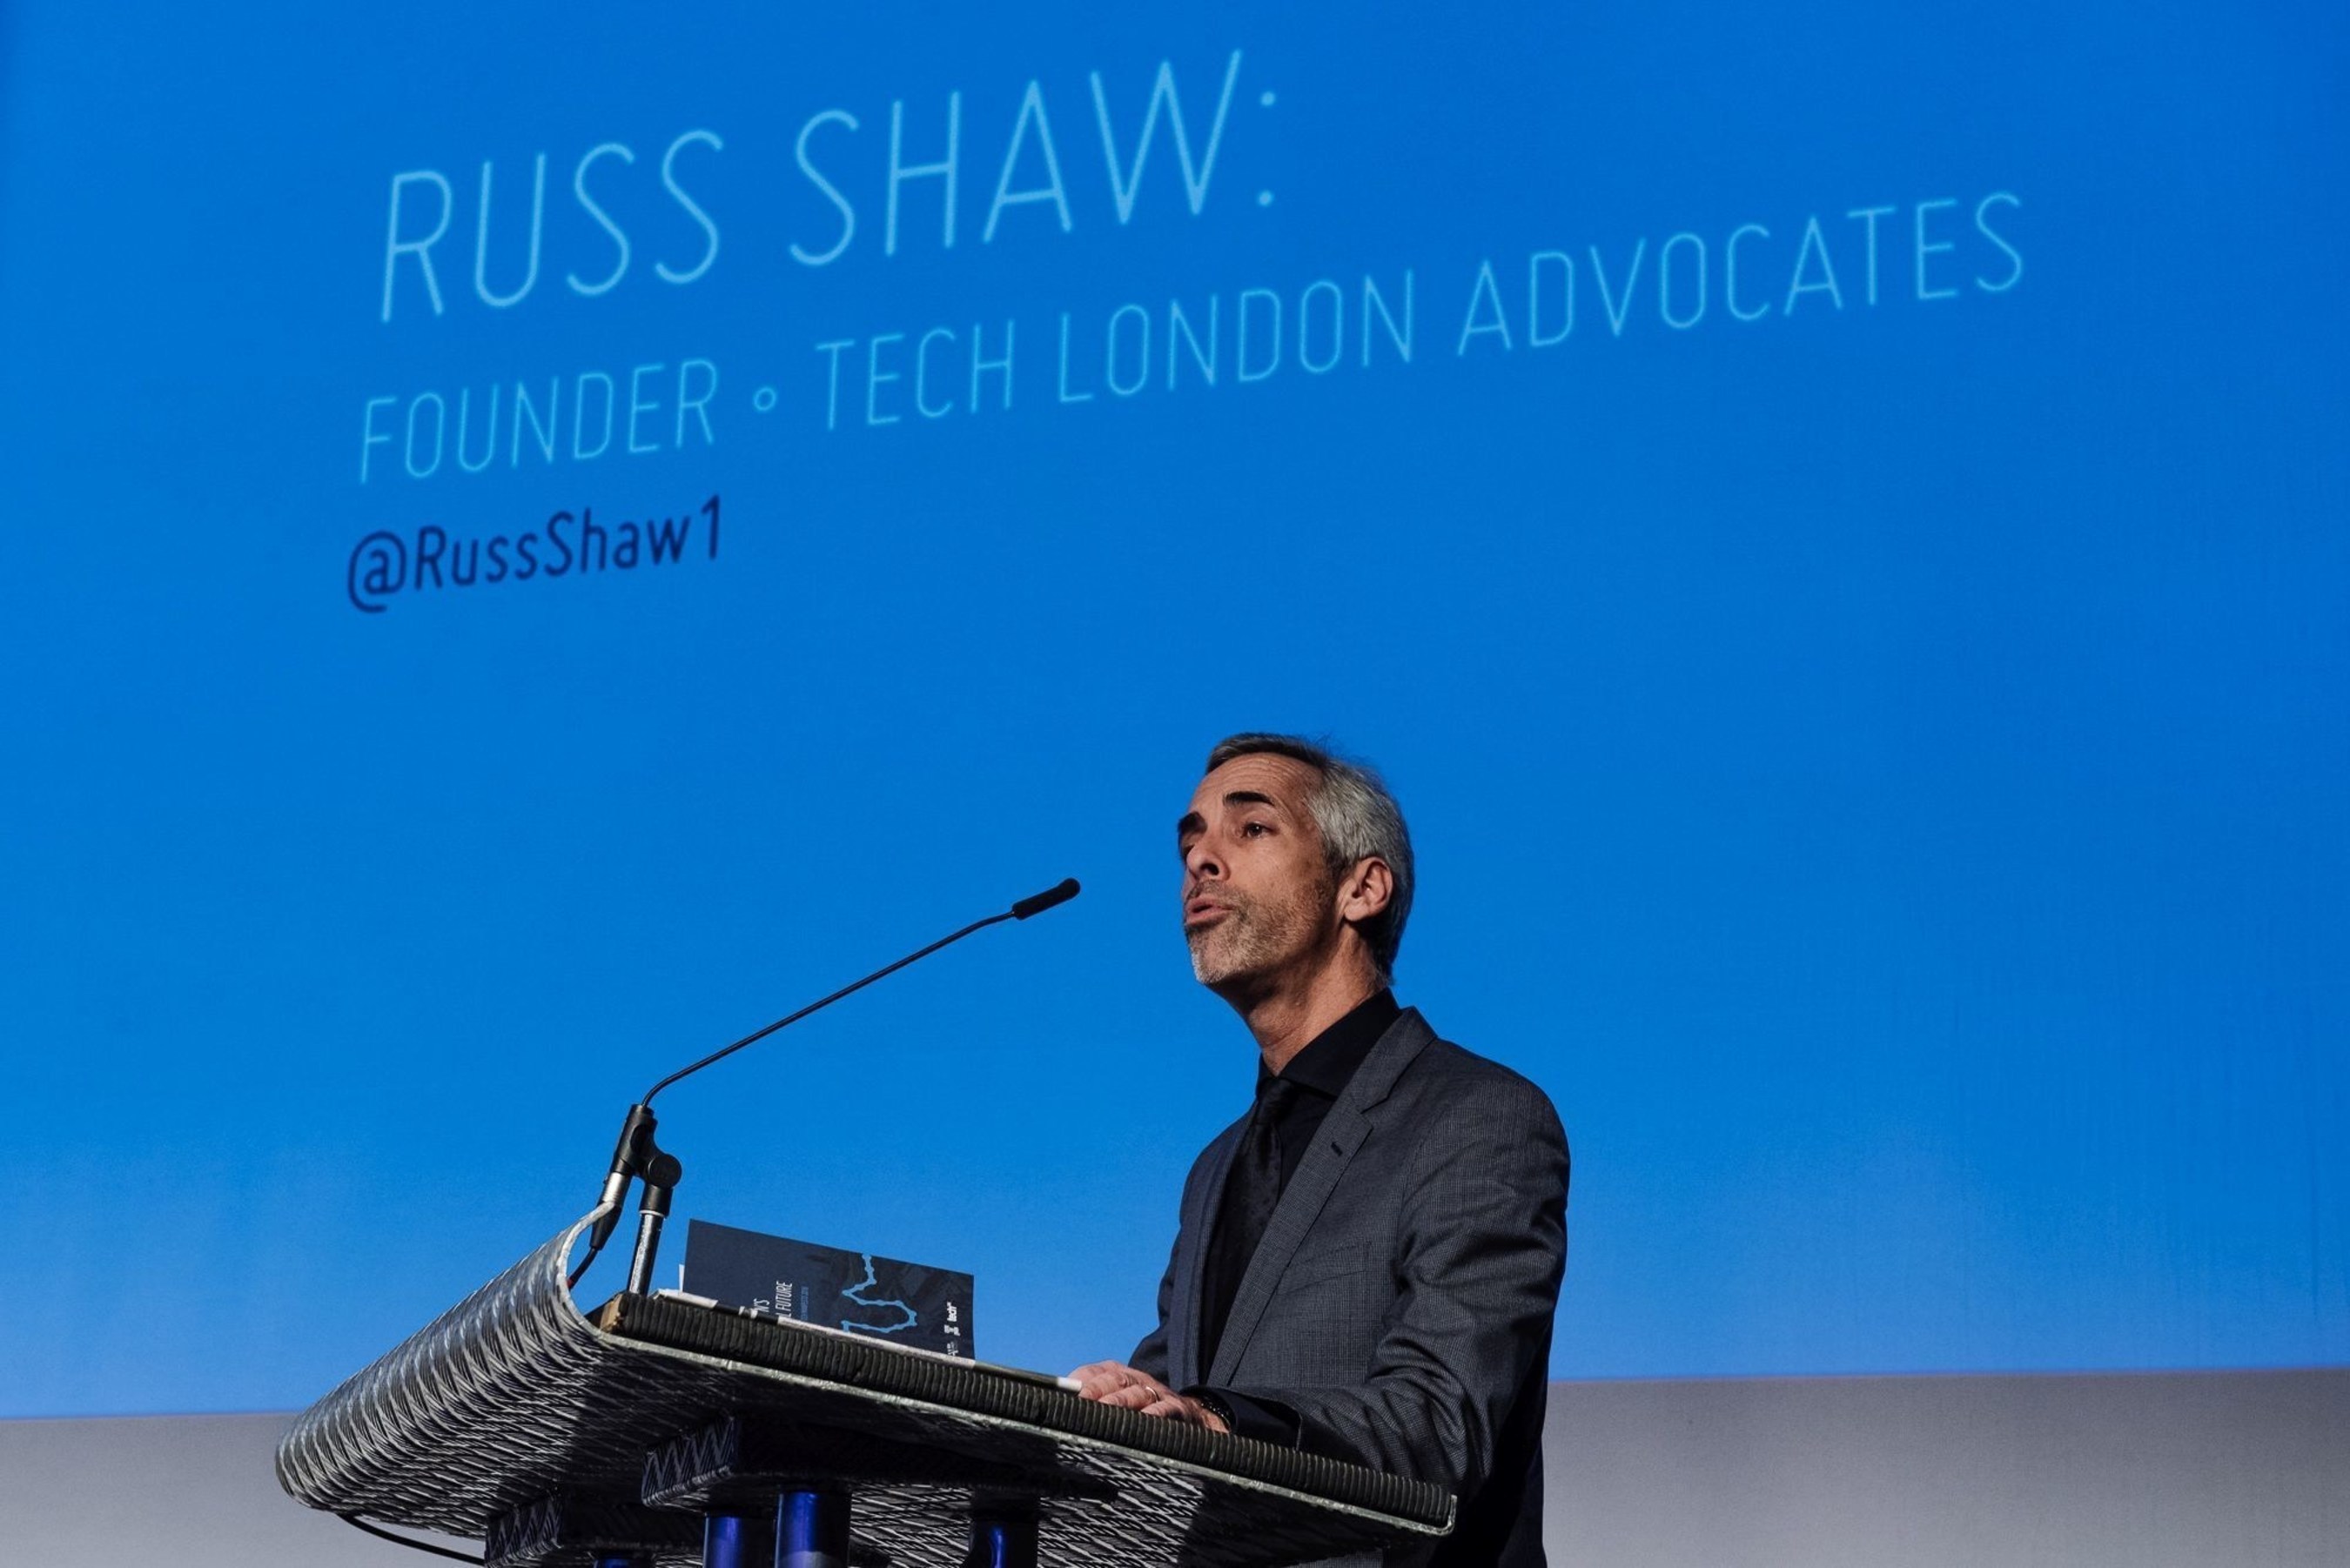 Russ Shaw, Mayor of London's Technology Ambassador and Founder of Tech London Advocates, at the DebateTech Hustings. (PRNewsFoto/London & Partners) (PRNewsFoto/London & Partners)